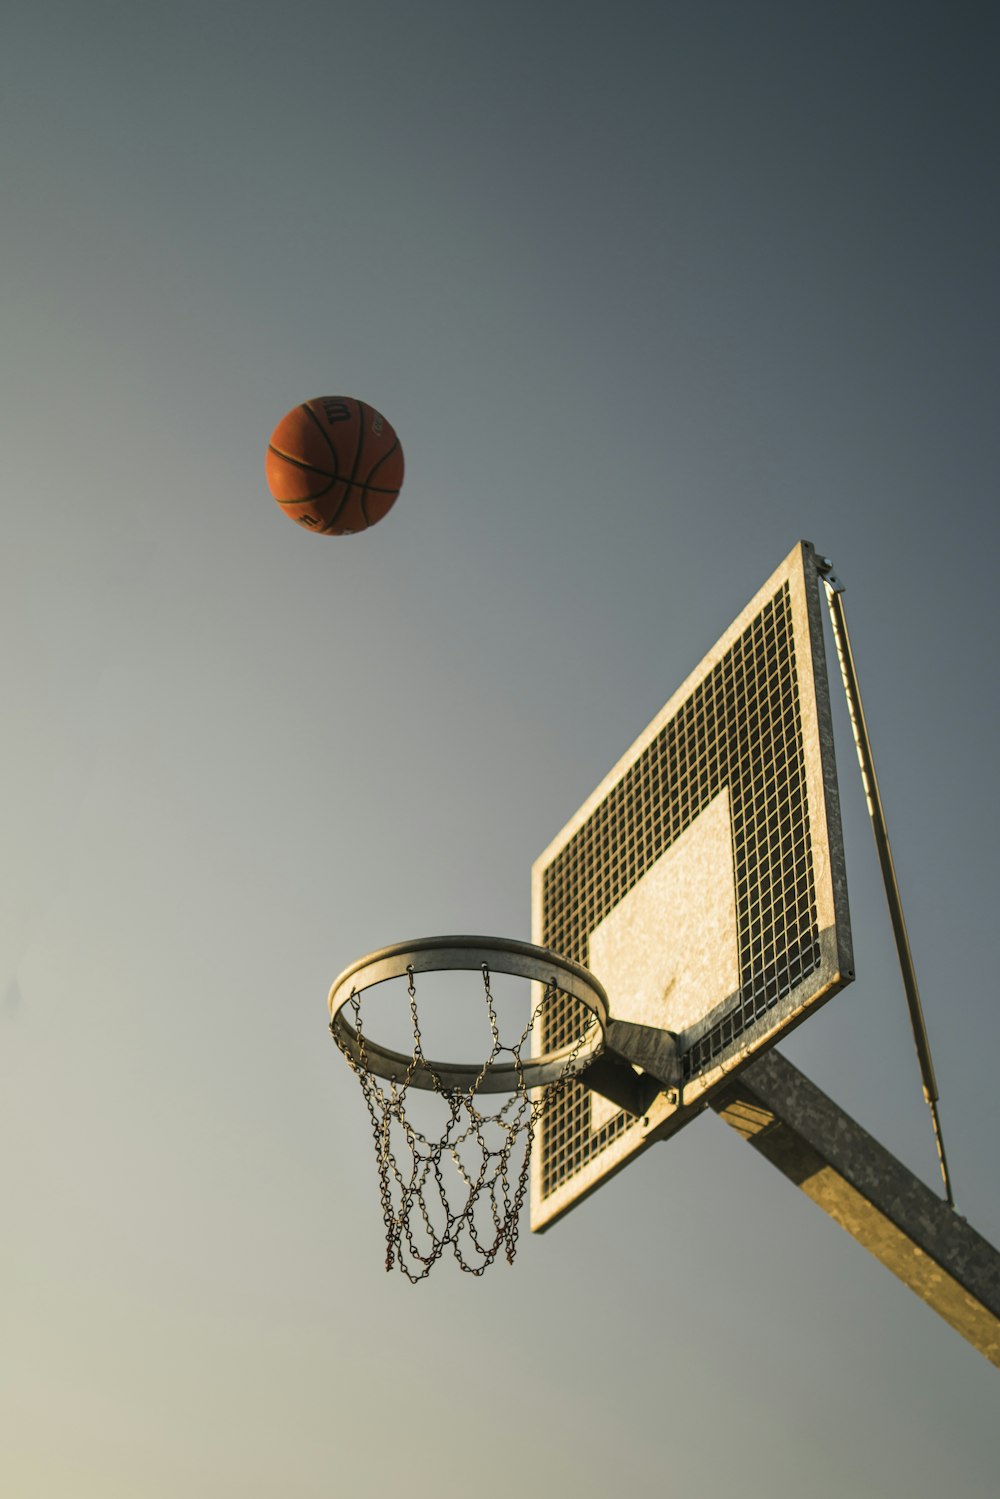 basketball on basketball hoop under blue sky during daytime